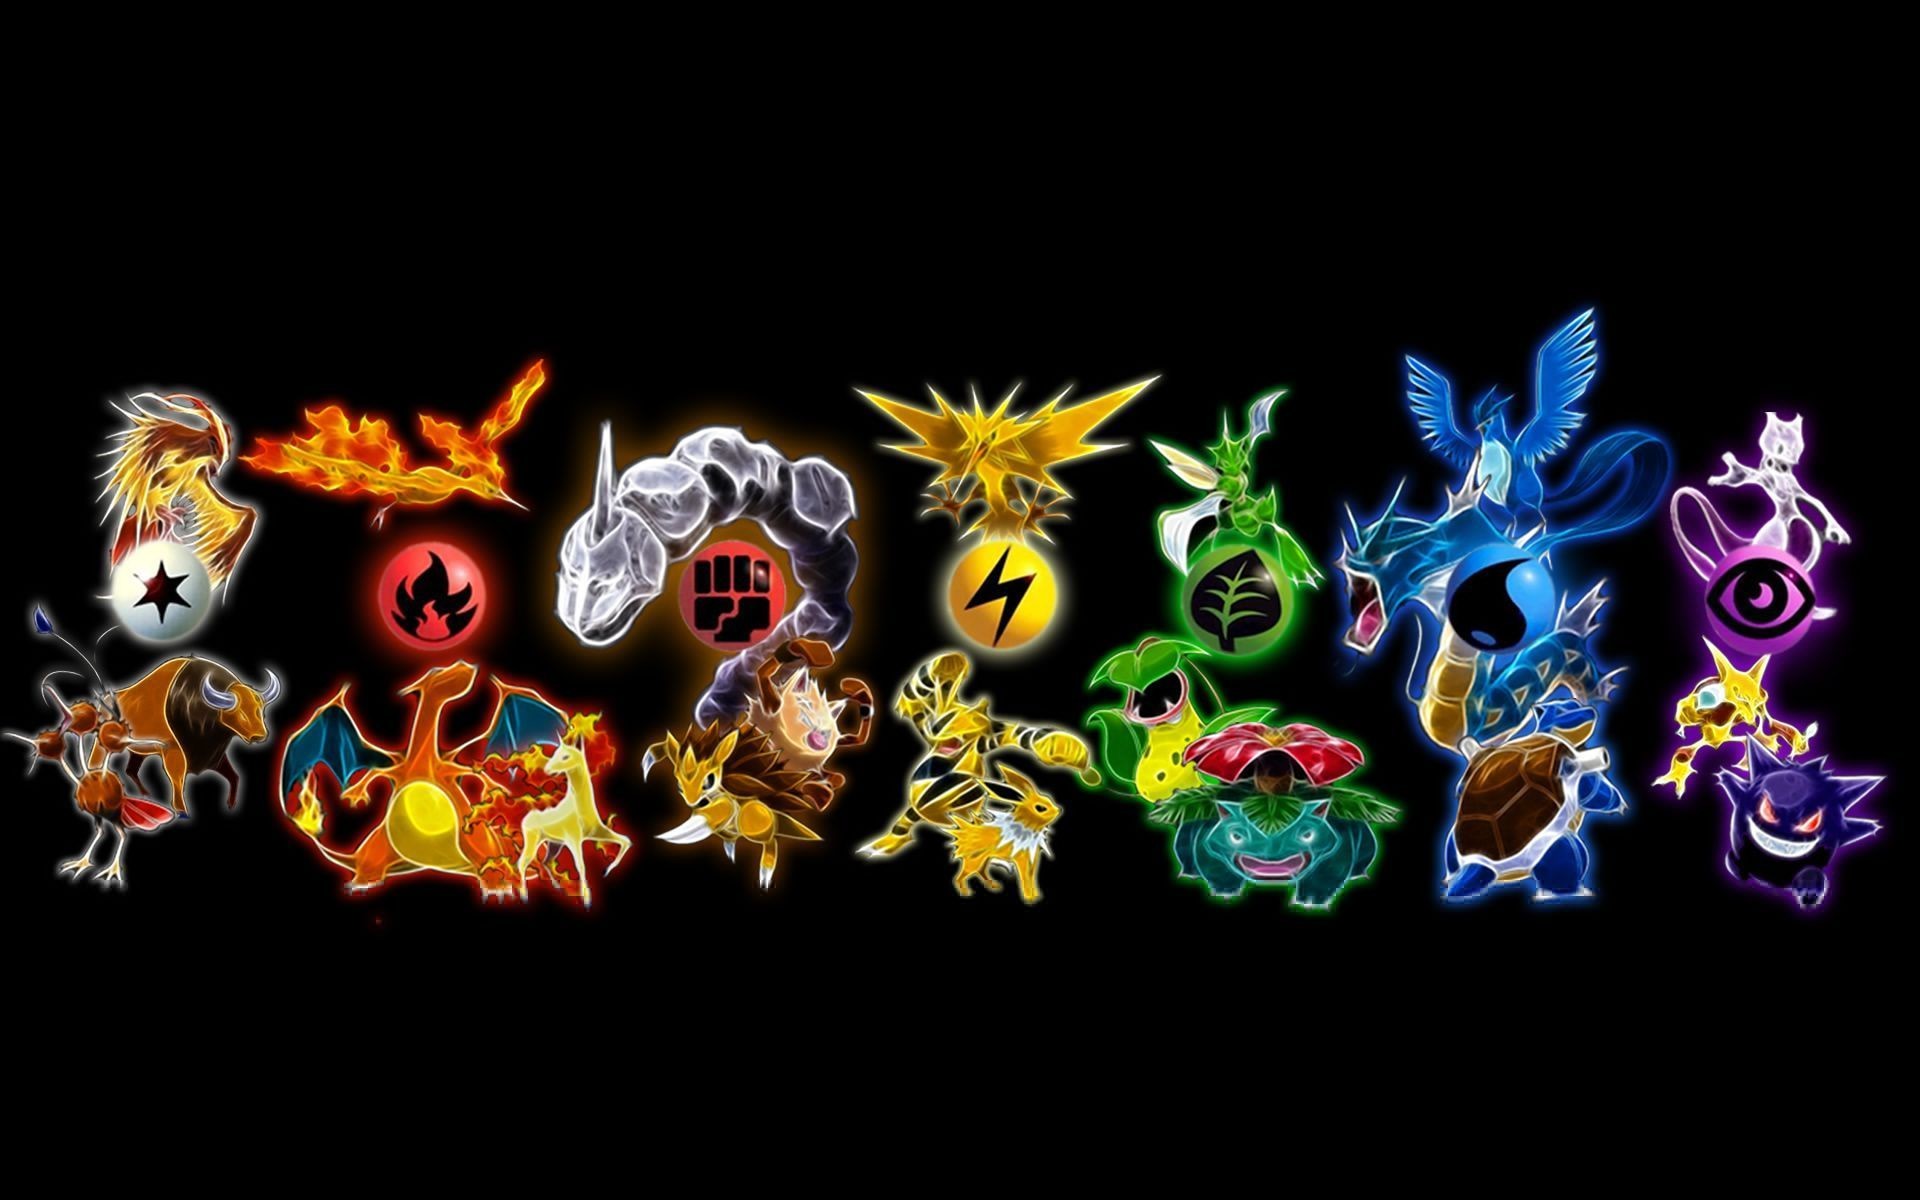 All0412  on Twitter Pokémon Wallpaper Mega Scizor FanArt Pokémon  Mega Kalos httpstcoTBmAfgu8M4  Twitter